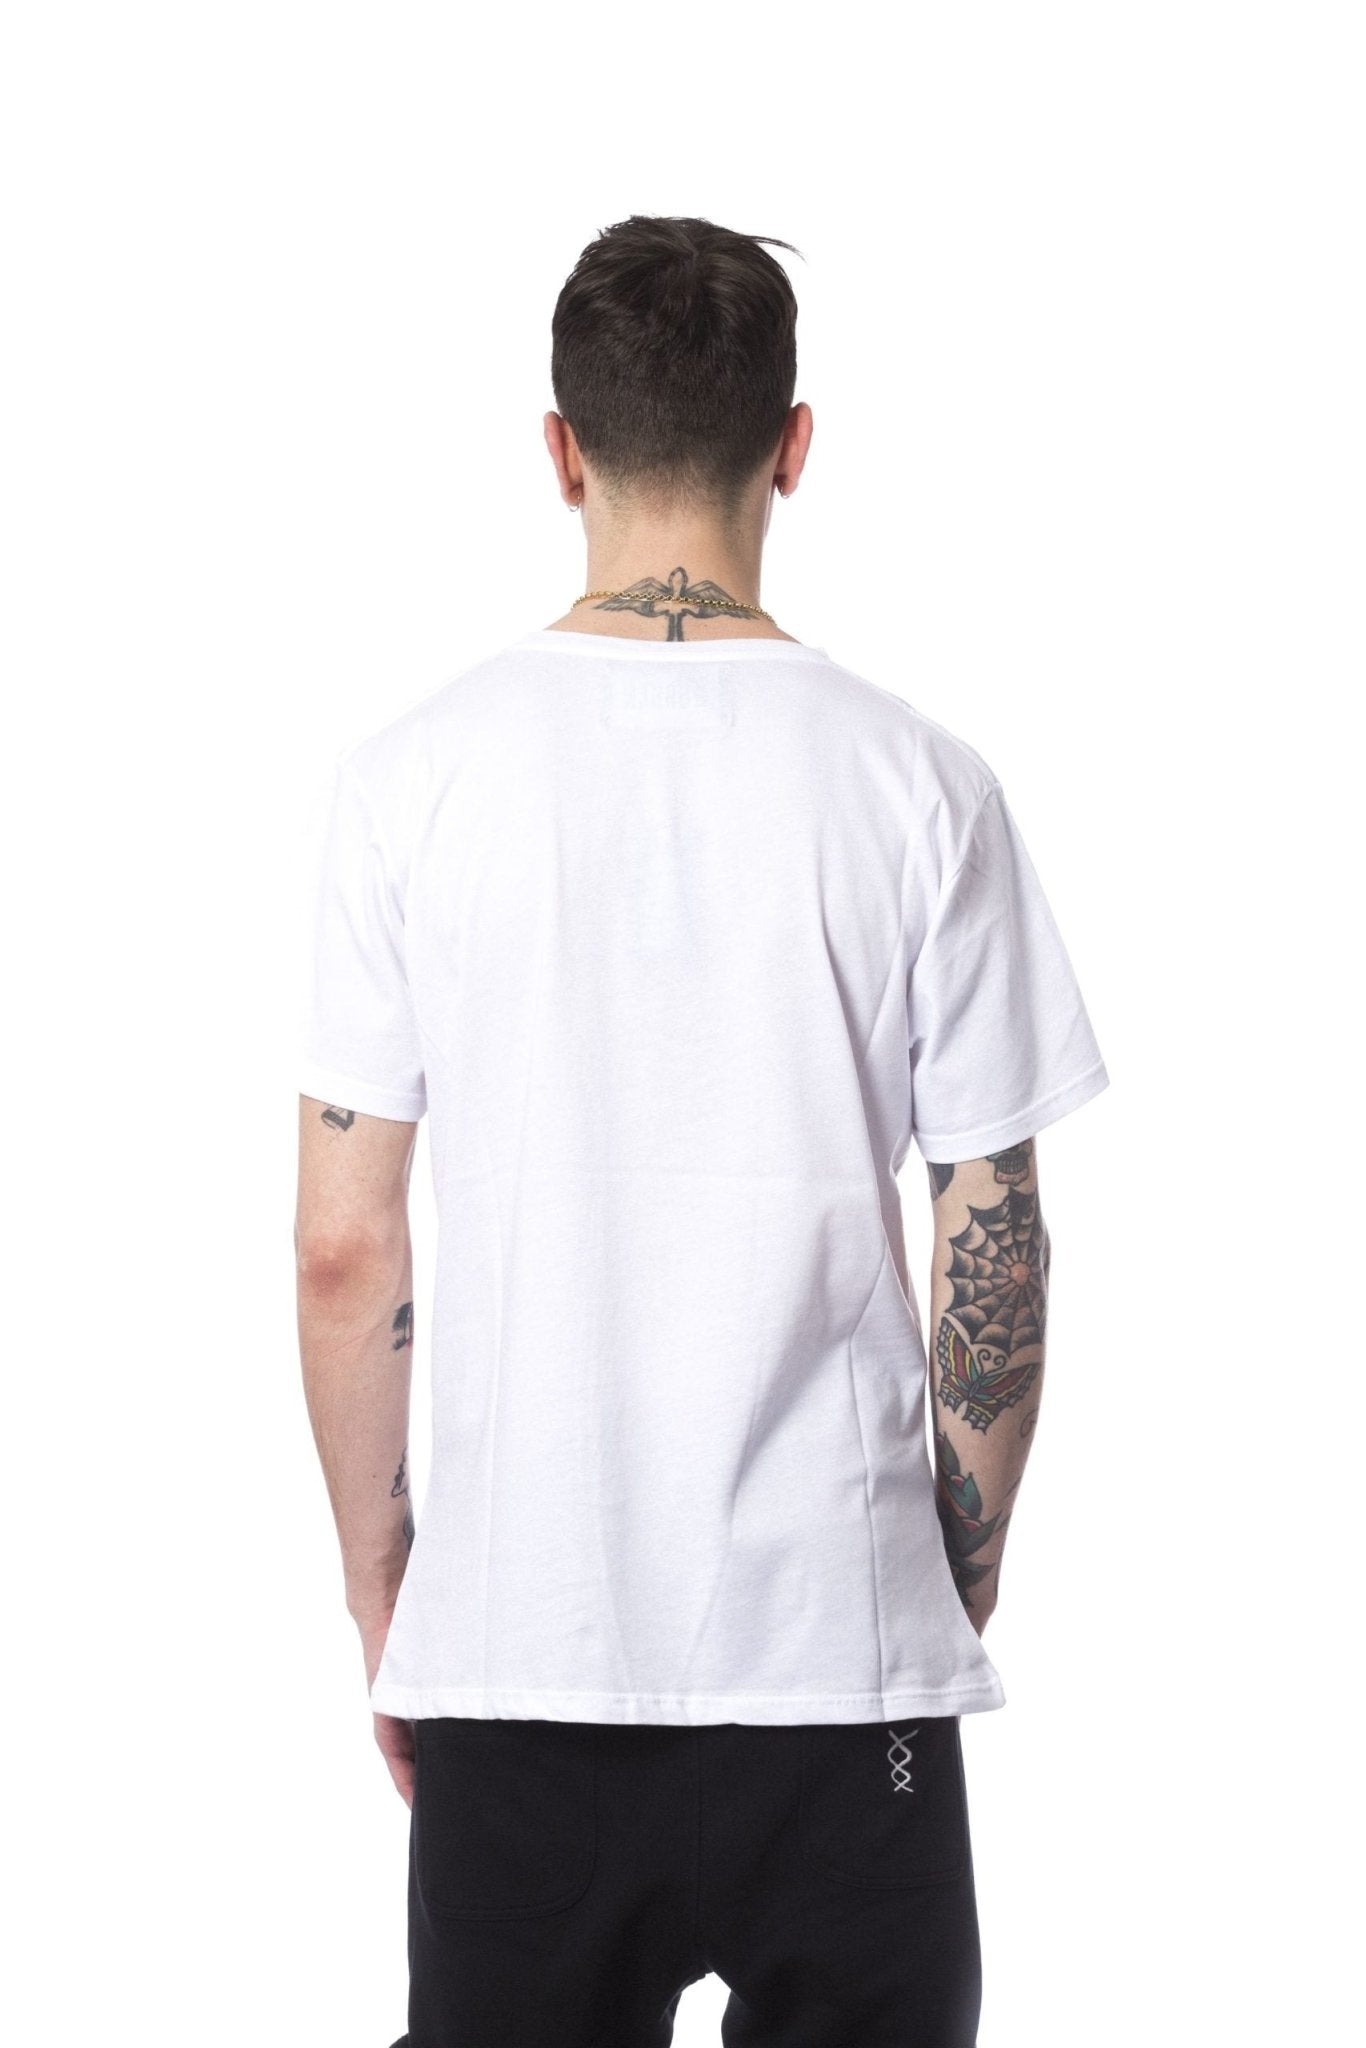 Nicolo Tonetto White Cotton T-Shirt - Fizigo